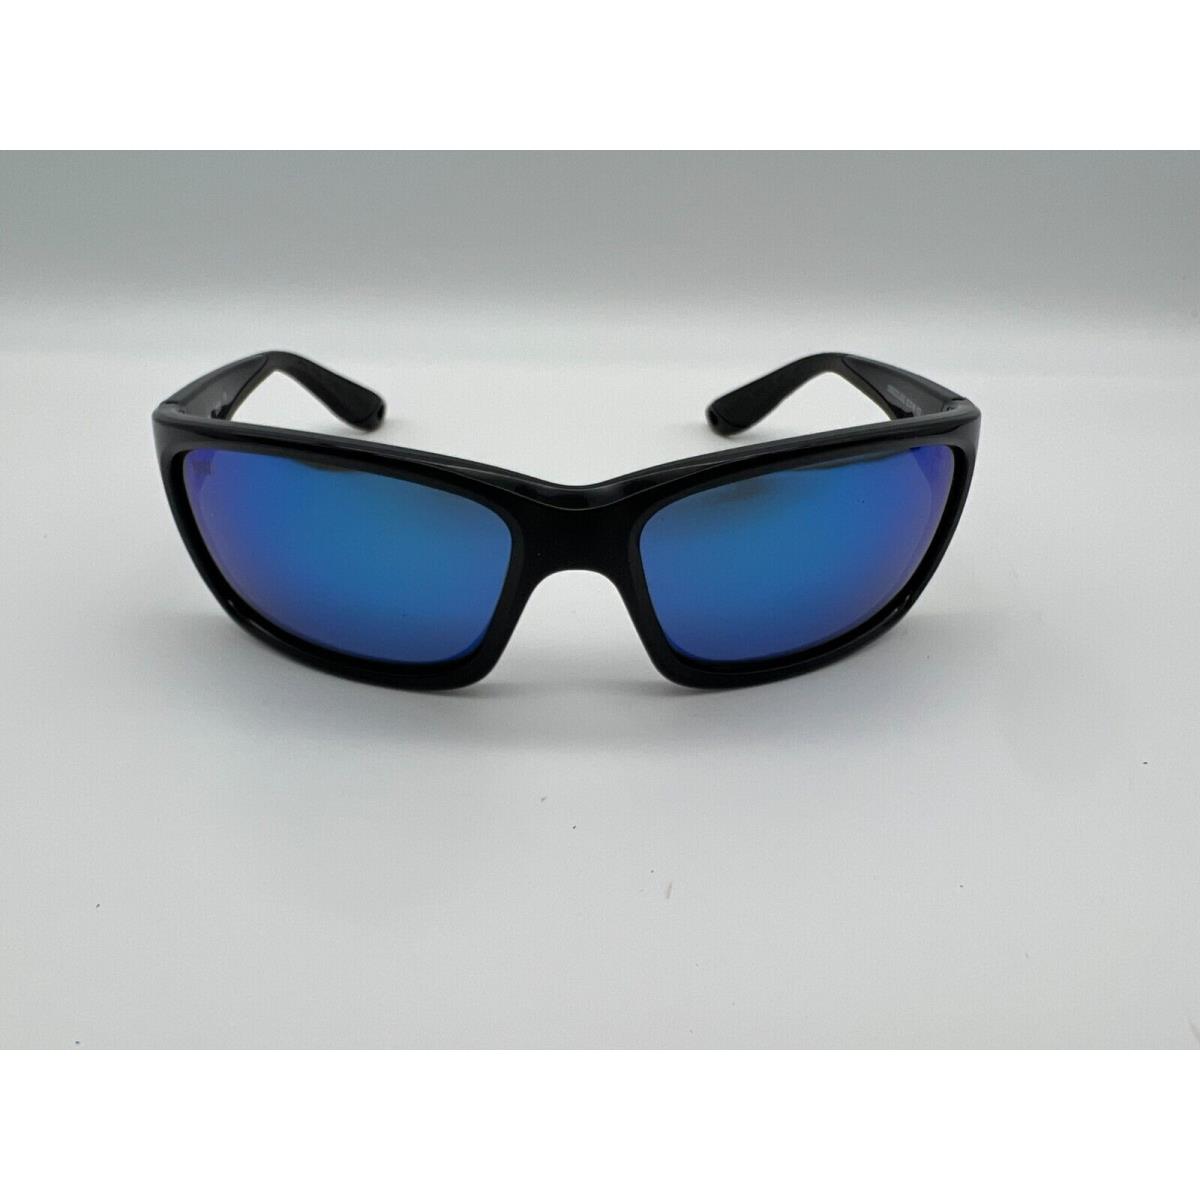 Costa Del Mar Jose Polarized Sunglasses Matte Black/ Blue Mirror Glass 580G - Frame: Black, Lens: Blue